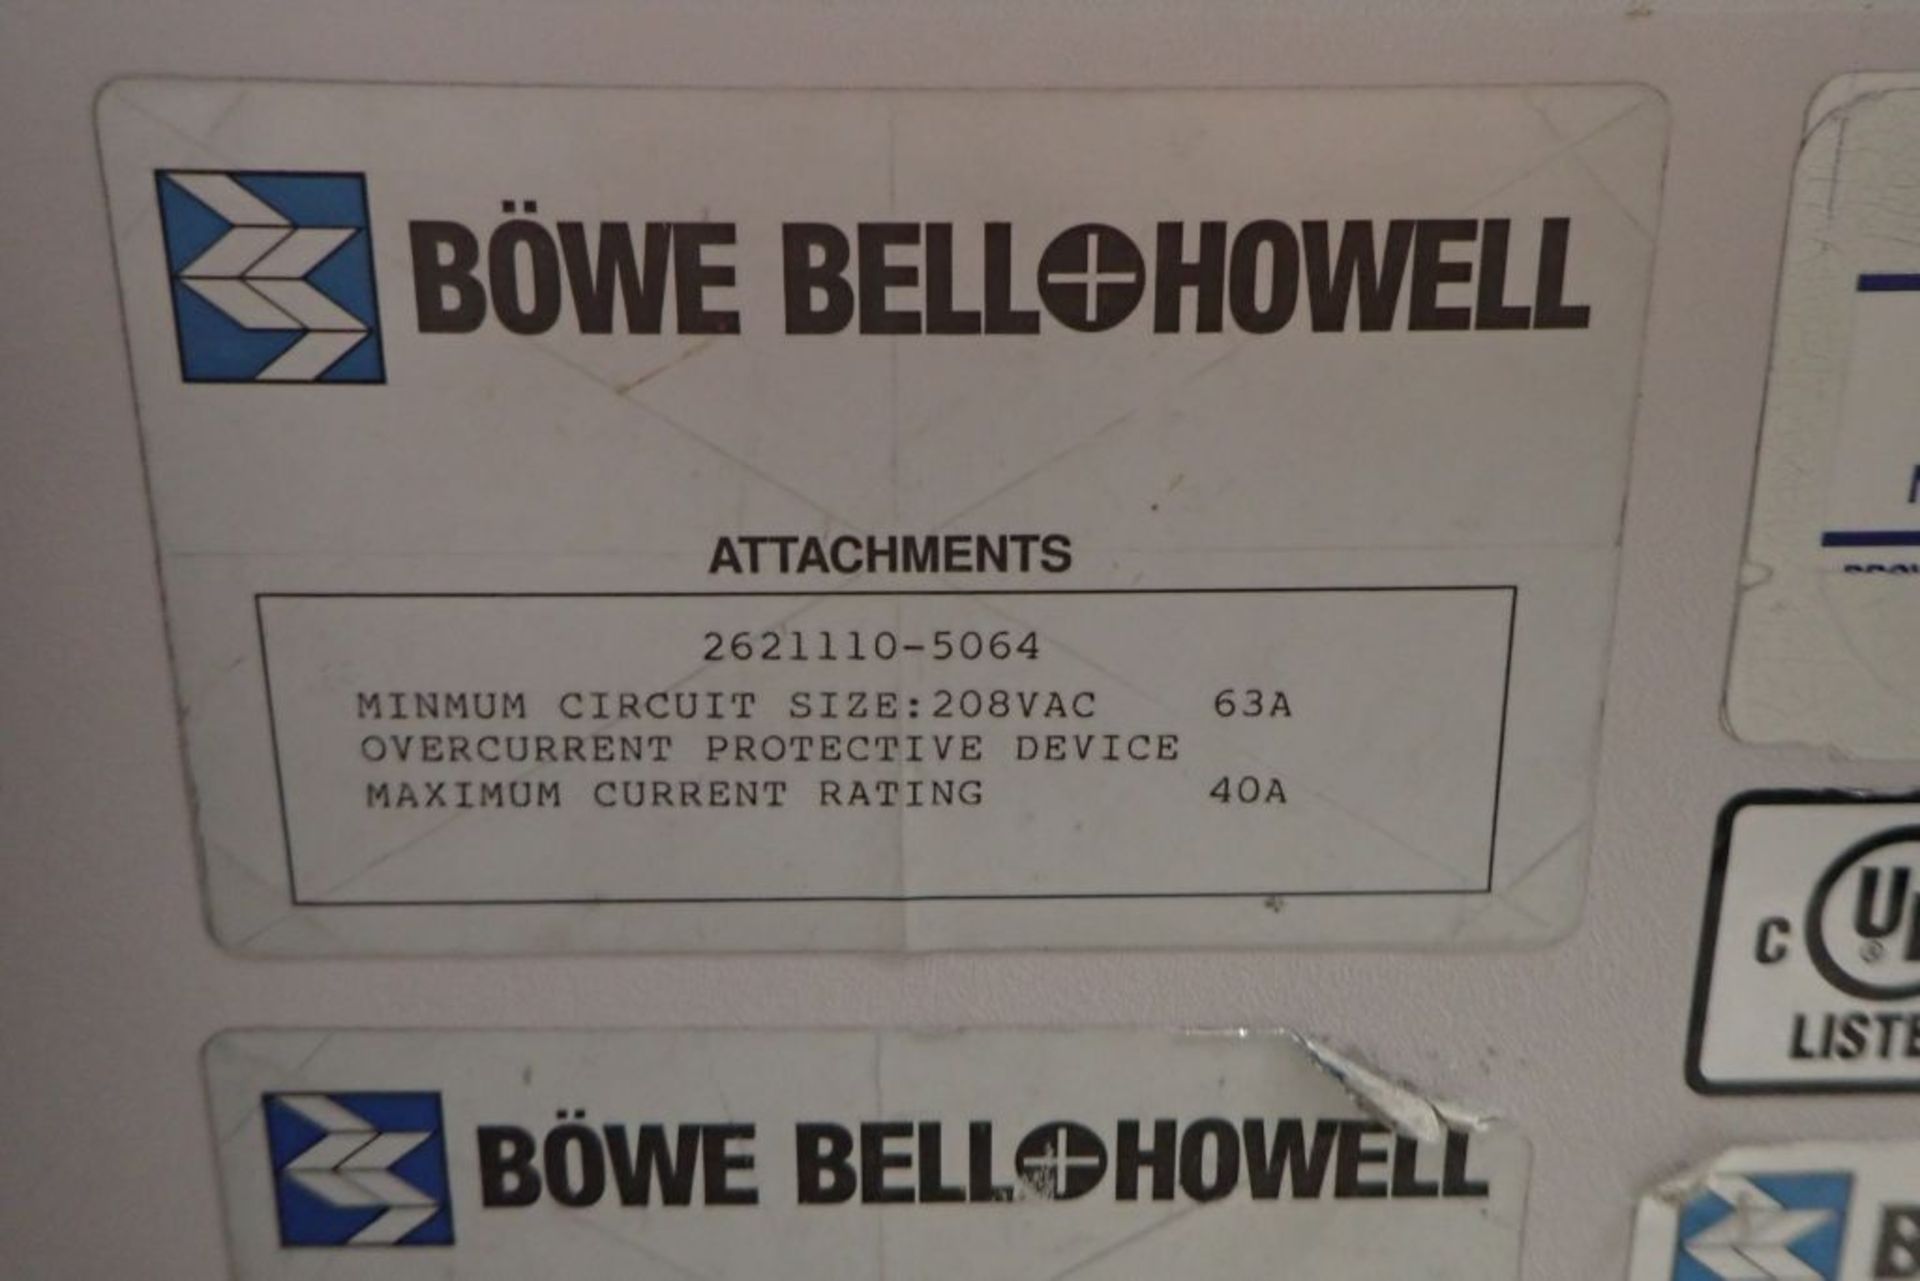 Bowe Bell Howell Criterion IV Sorter - Image 29 of 253